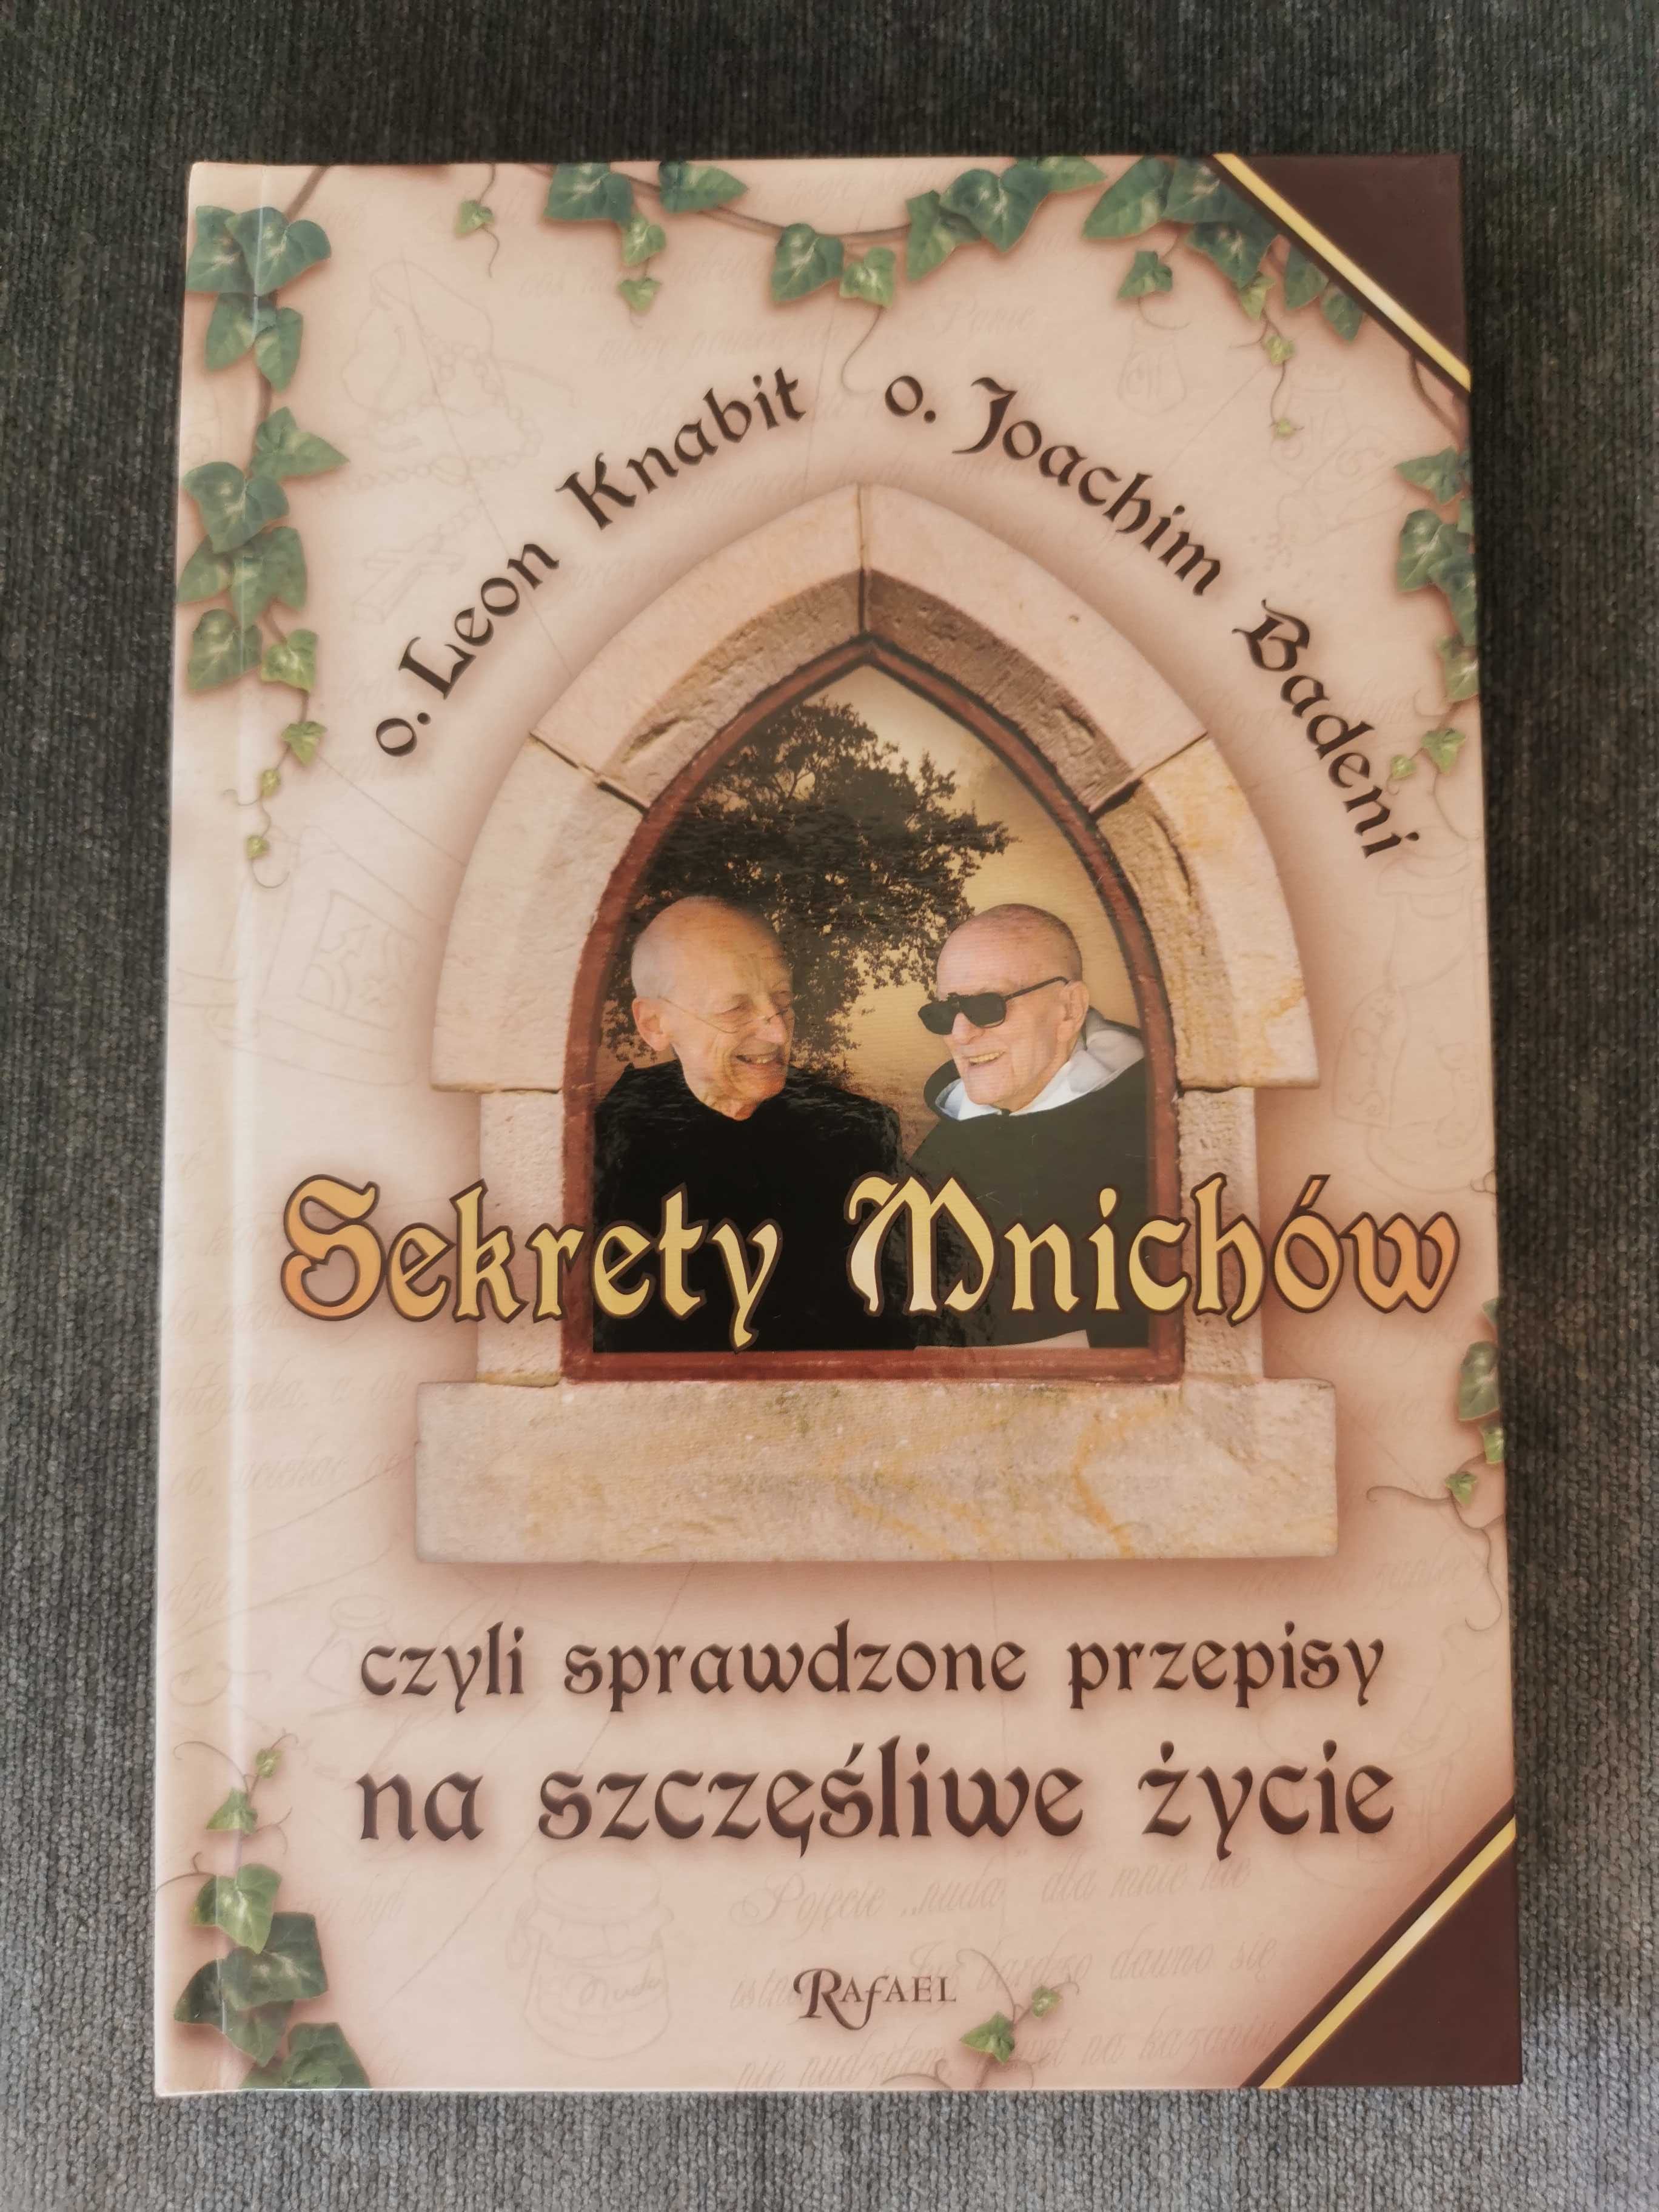 o. Leon Knabit i o. Joachim Badeni, Sekrety Mnichów